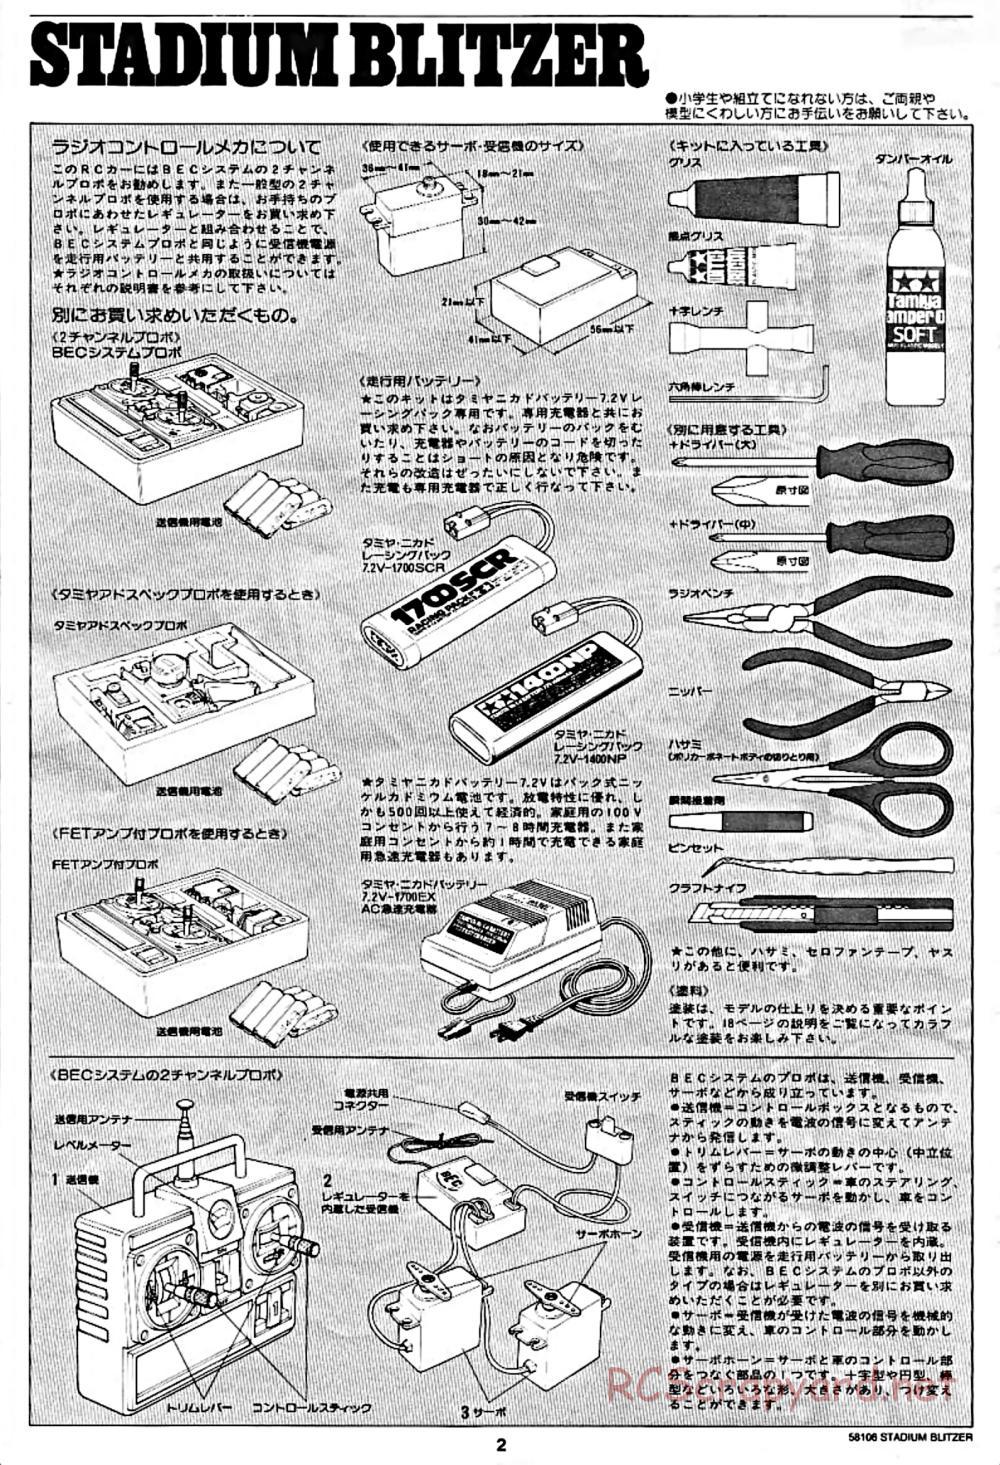 Tamiya - Stadium Blitzer Chassis - Manual - Page 2